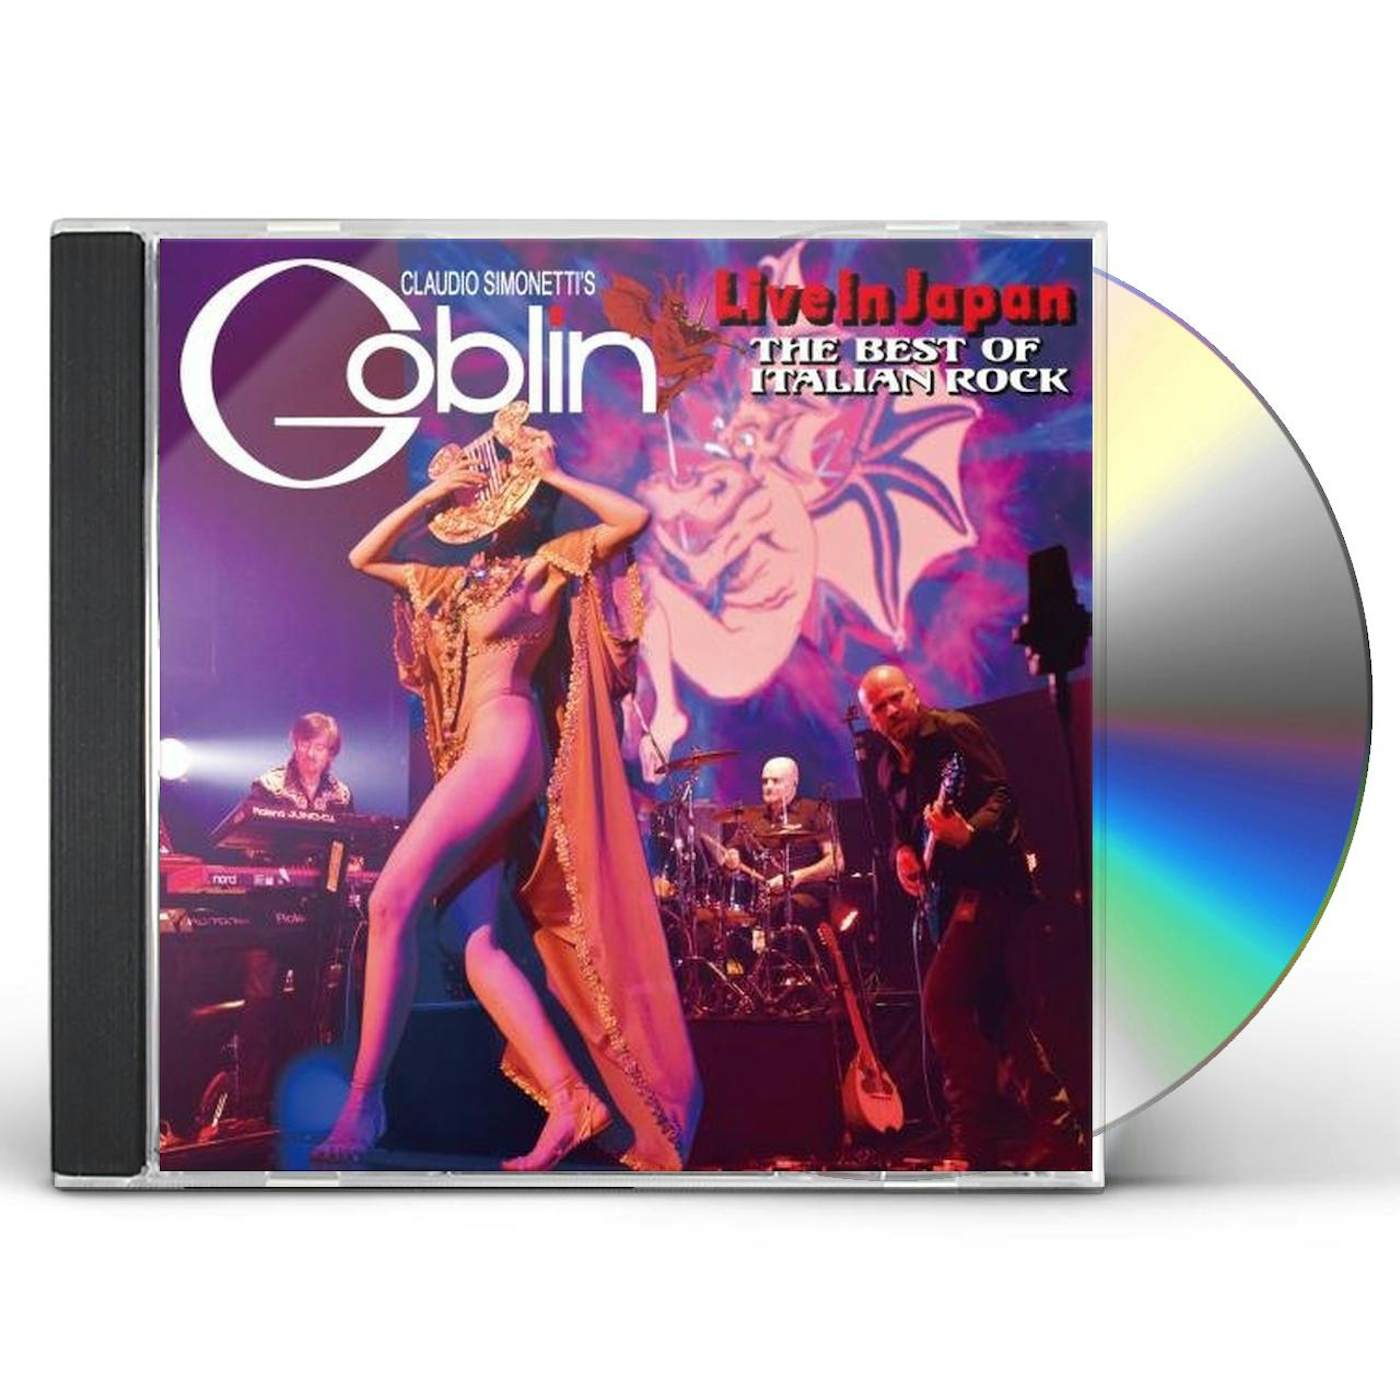 Claudio Simonetti's Goblin LIVE IN JAPAN - THE BEST OF ITALIAN ROCK (BLU SPEC) CD